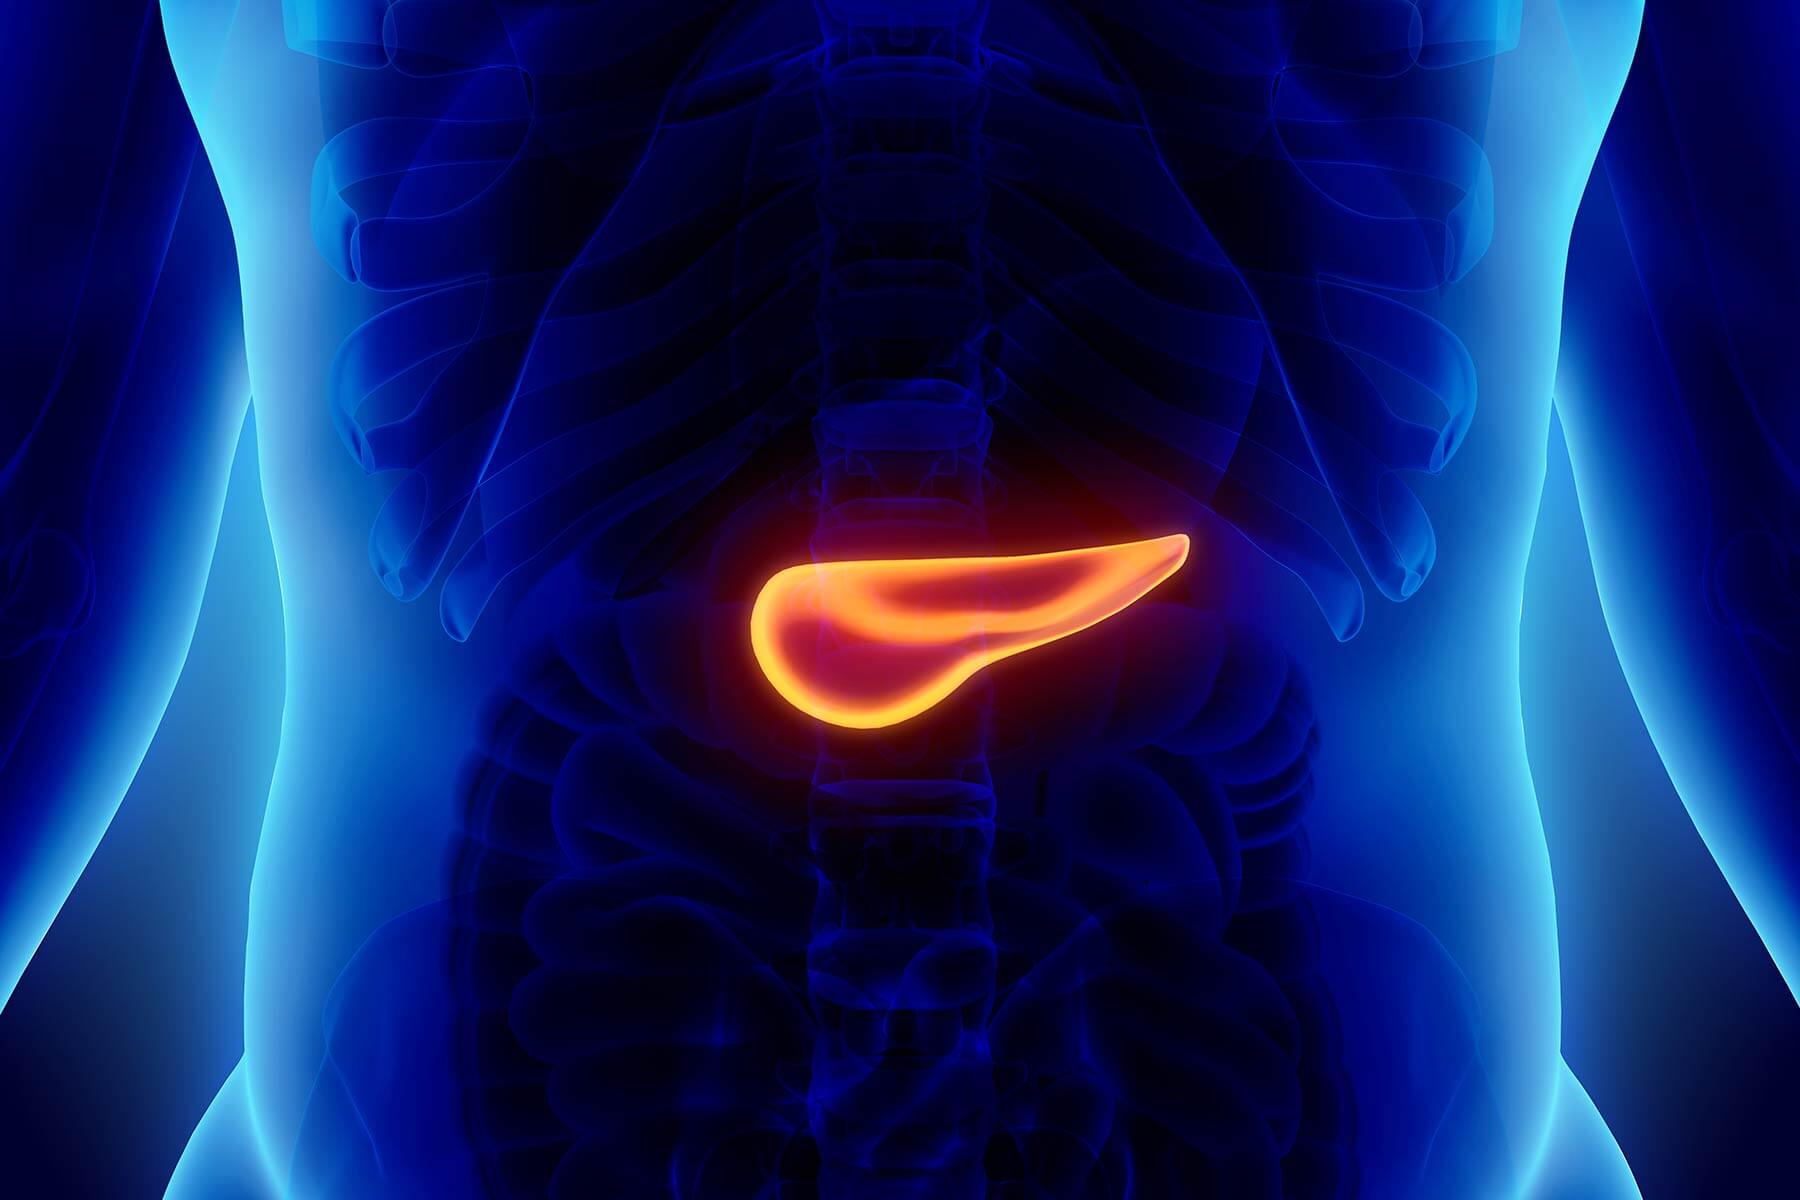 Pancreatic cancer abdominal distension